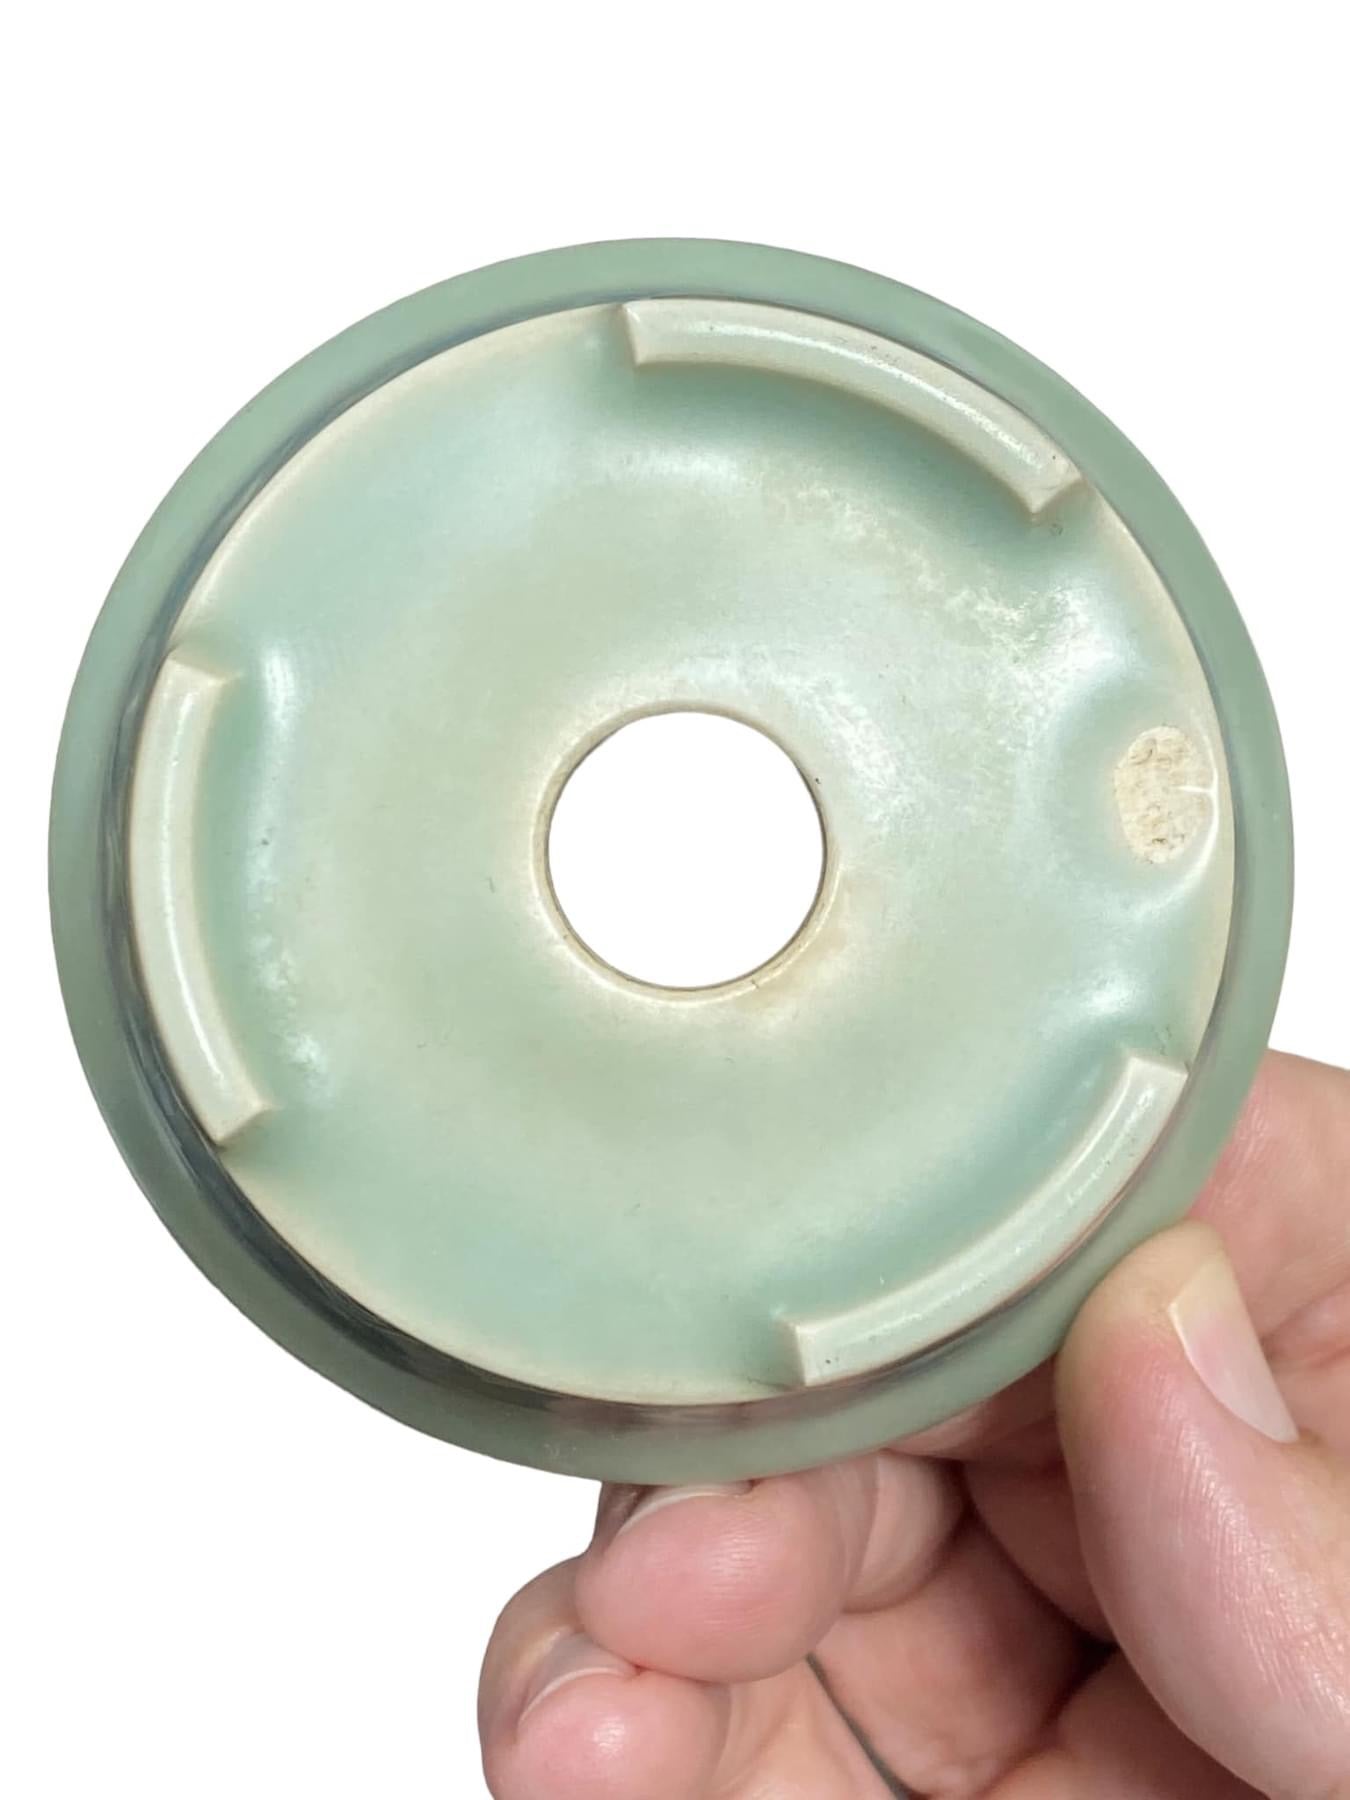 Tonyo - Rare and Highly Collectible Round Bonsai Pot